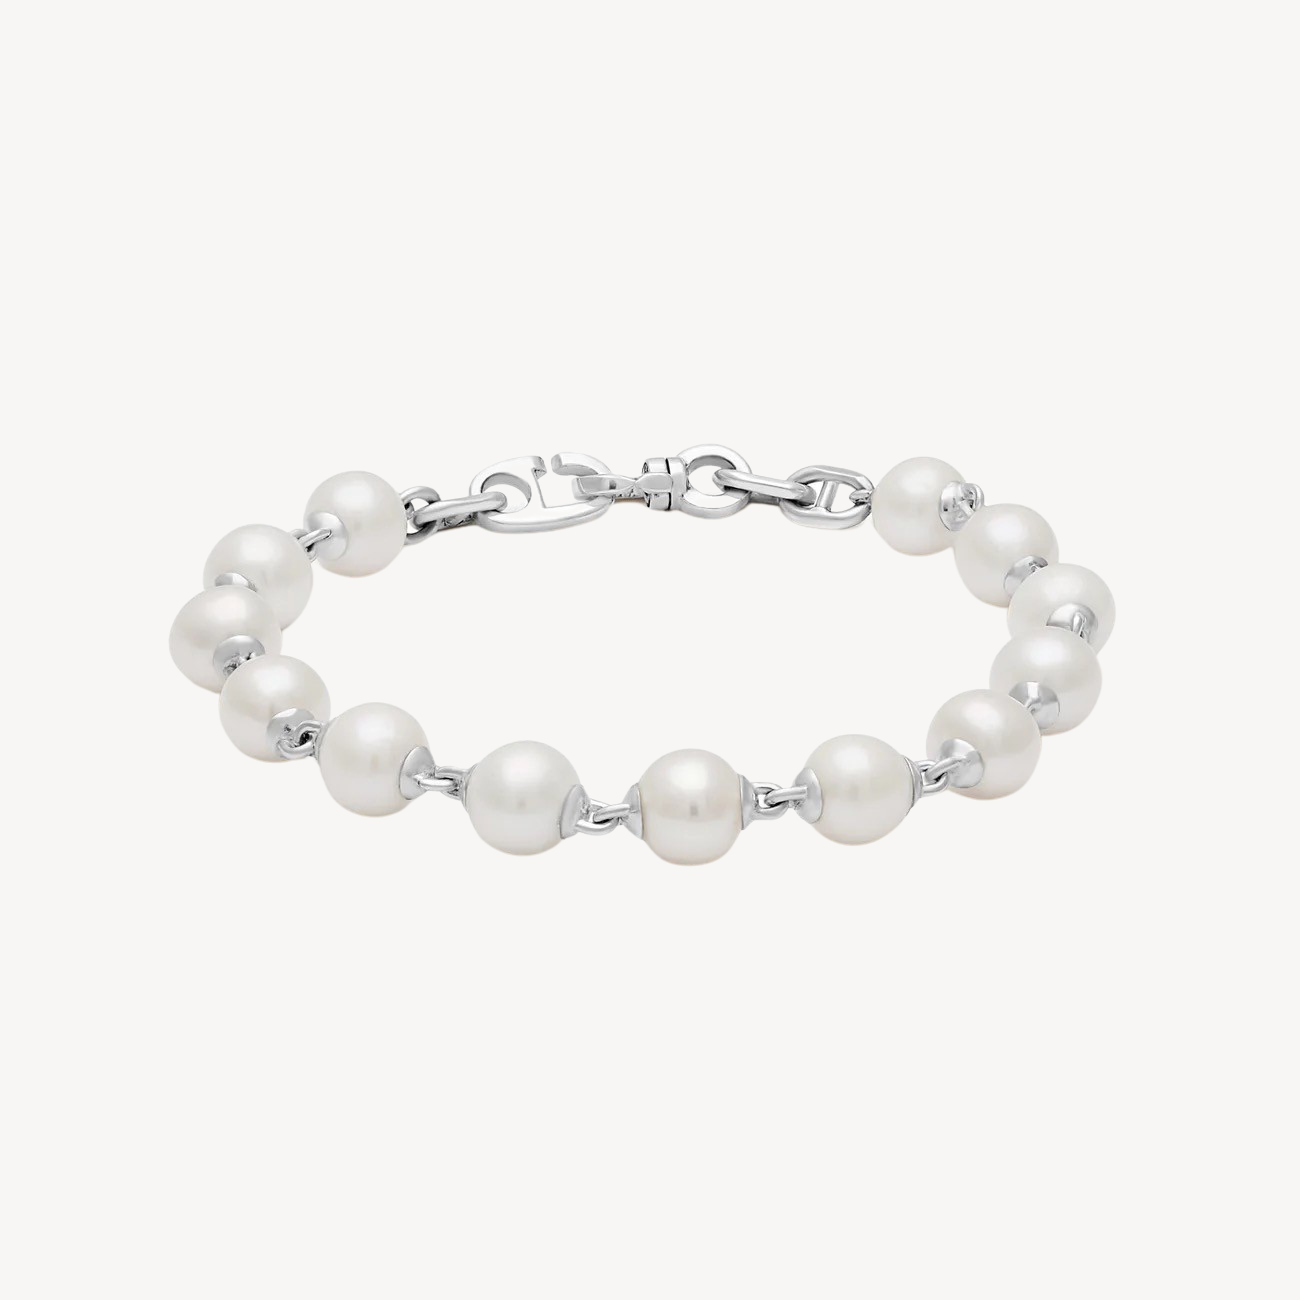 Consi Bracelet White Pearls Large